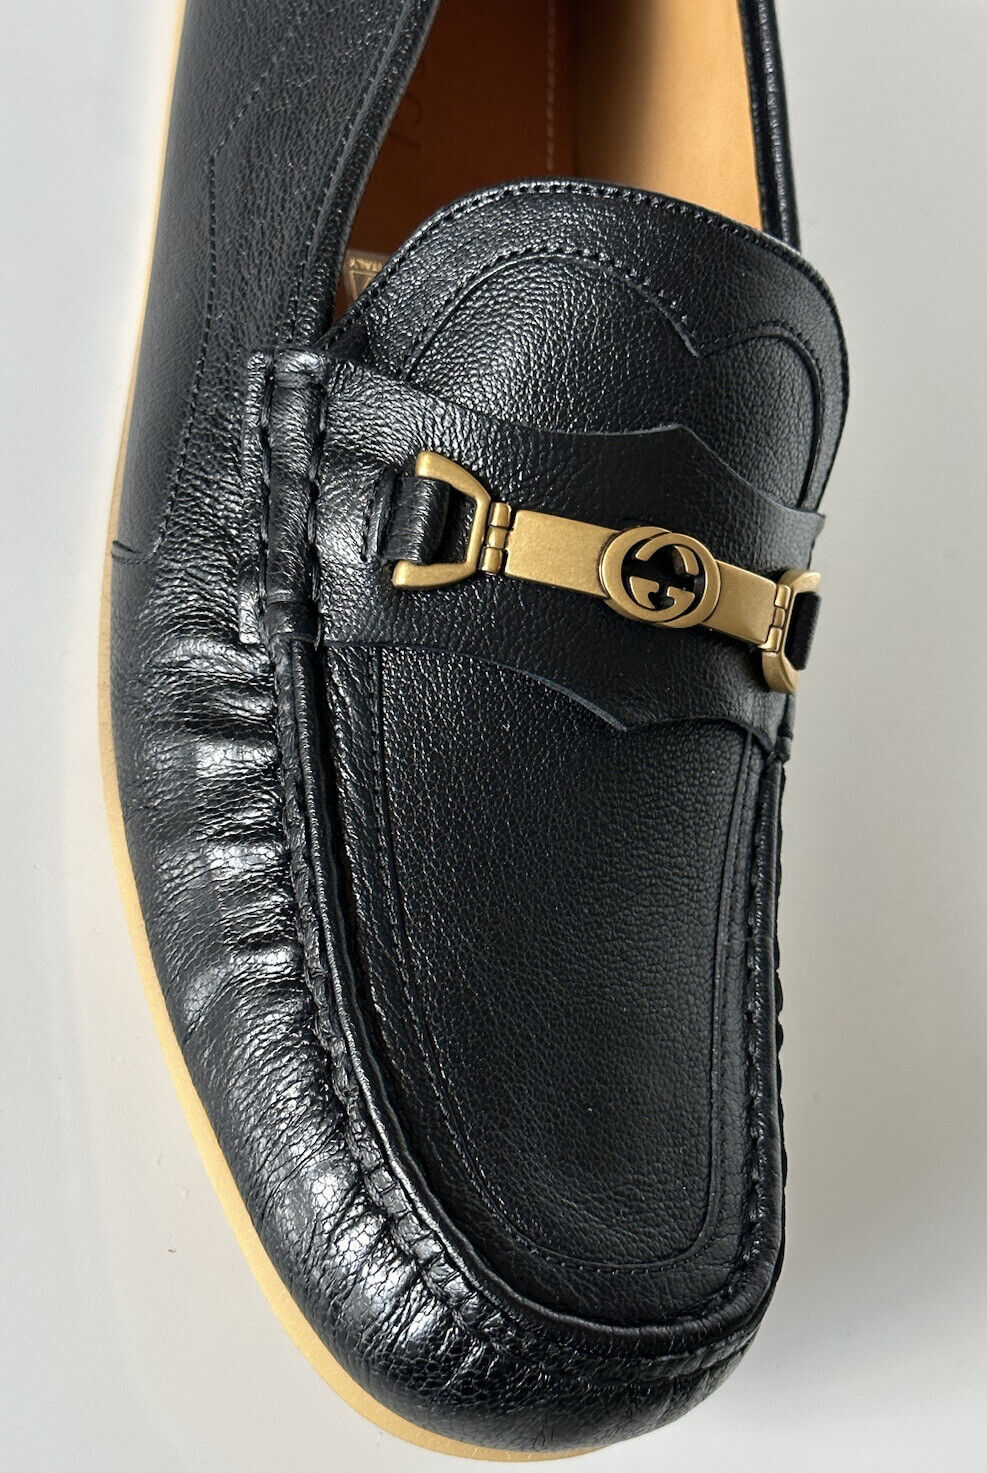 NIB Gucci Interlocking G Mens Leather Moccasin Shoes Black 13 (12.5G) 655519 IT